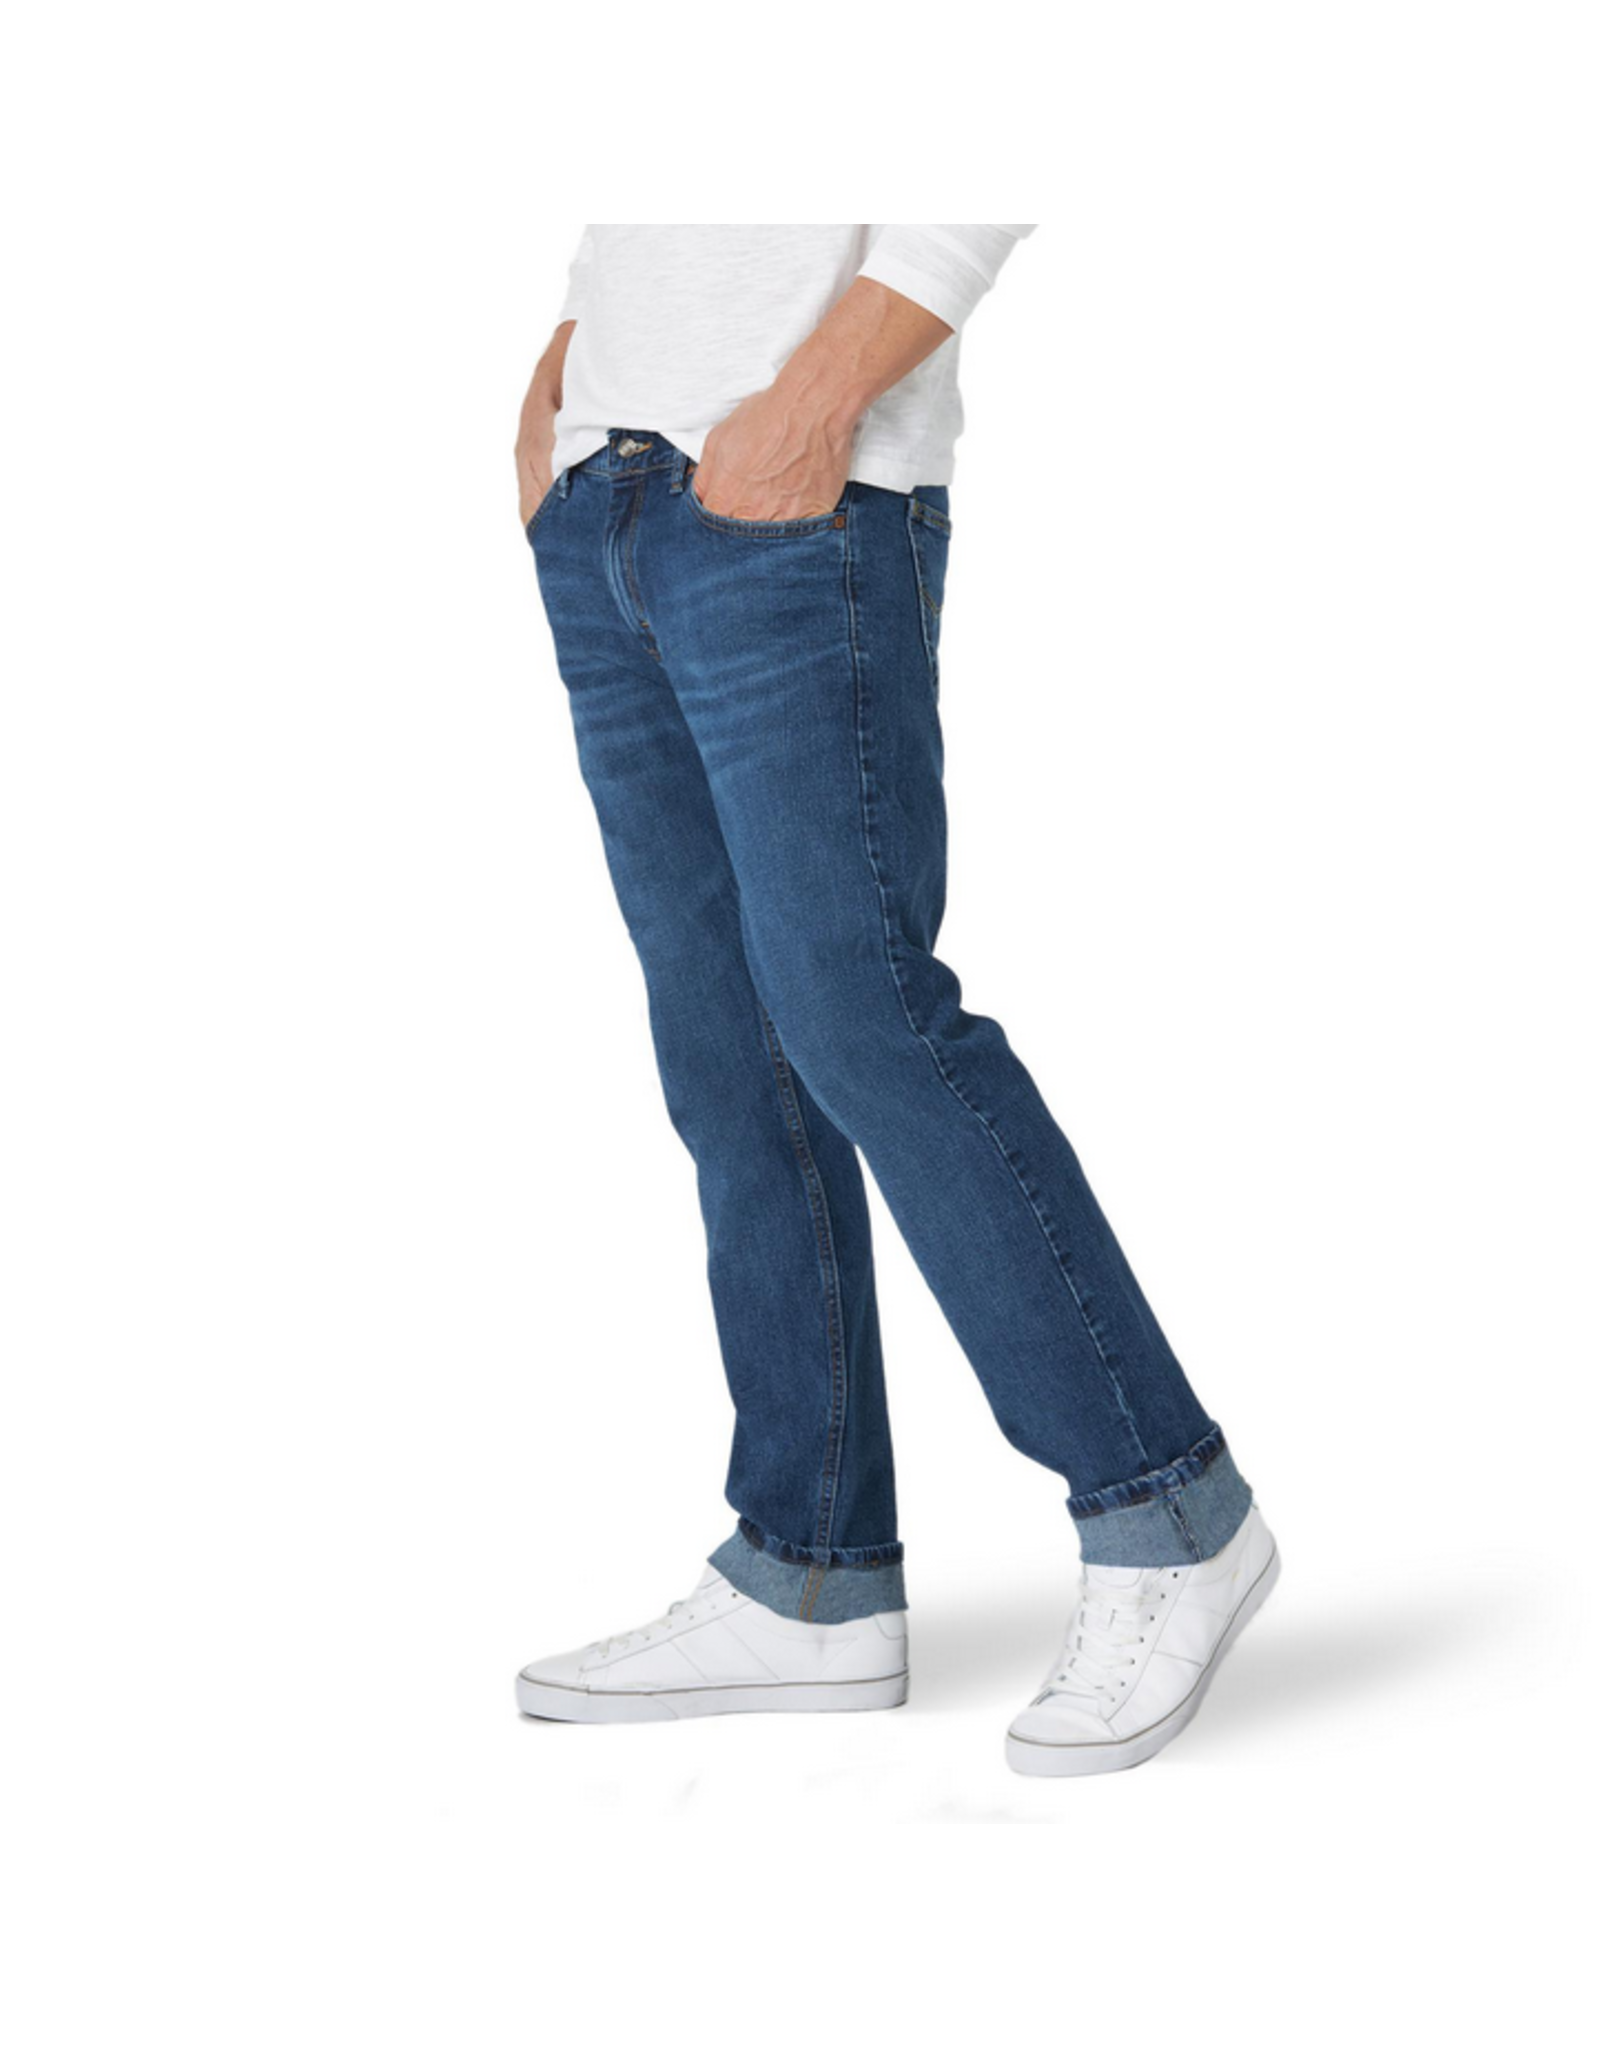 LEE - Legendary Core Slim Straight Jean - 102003517